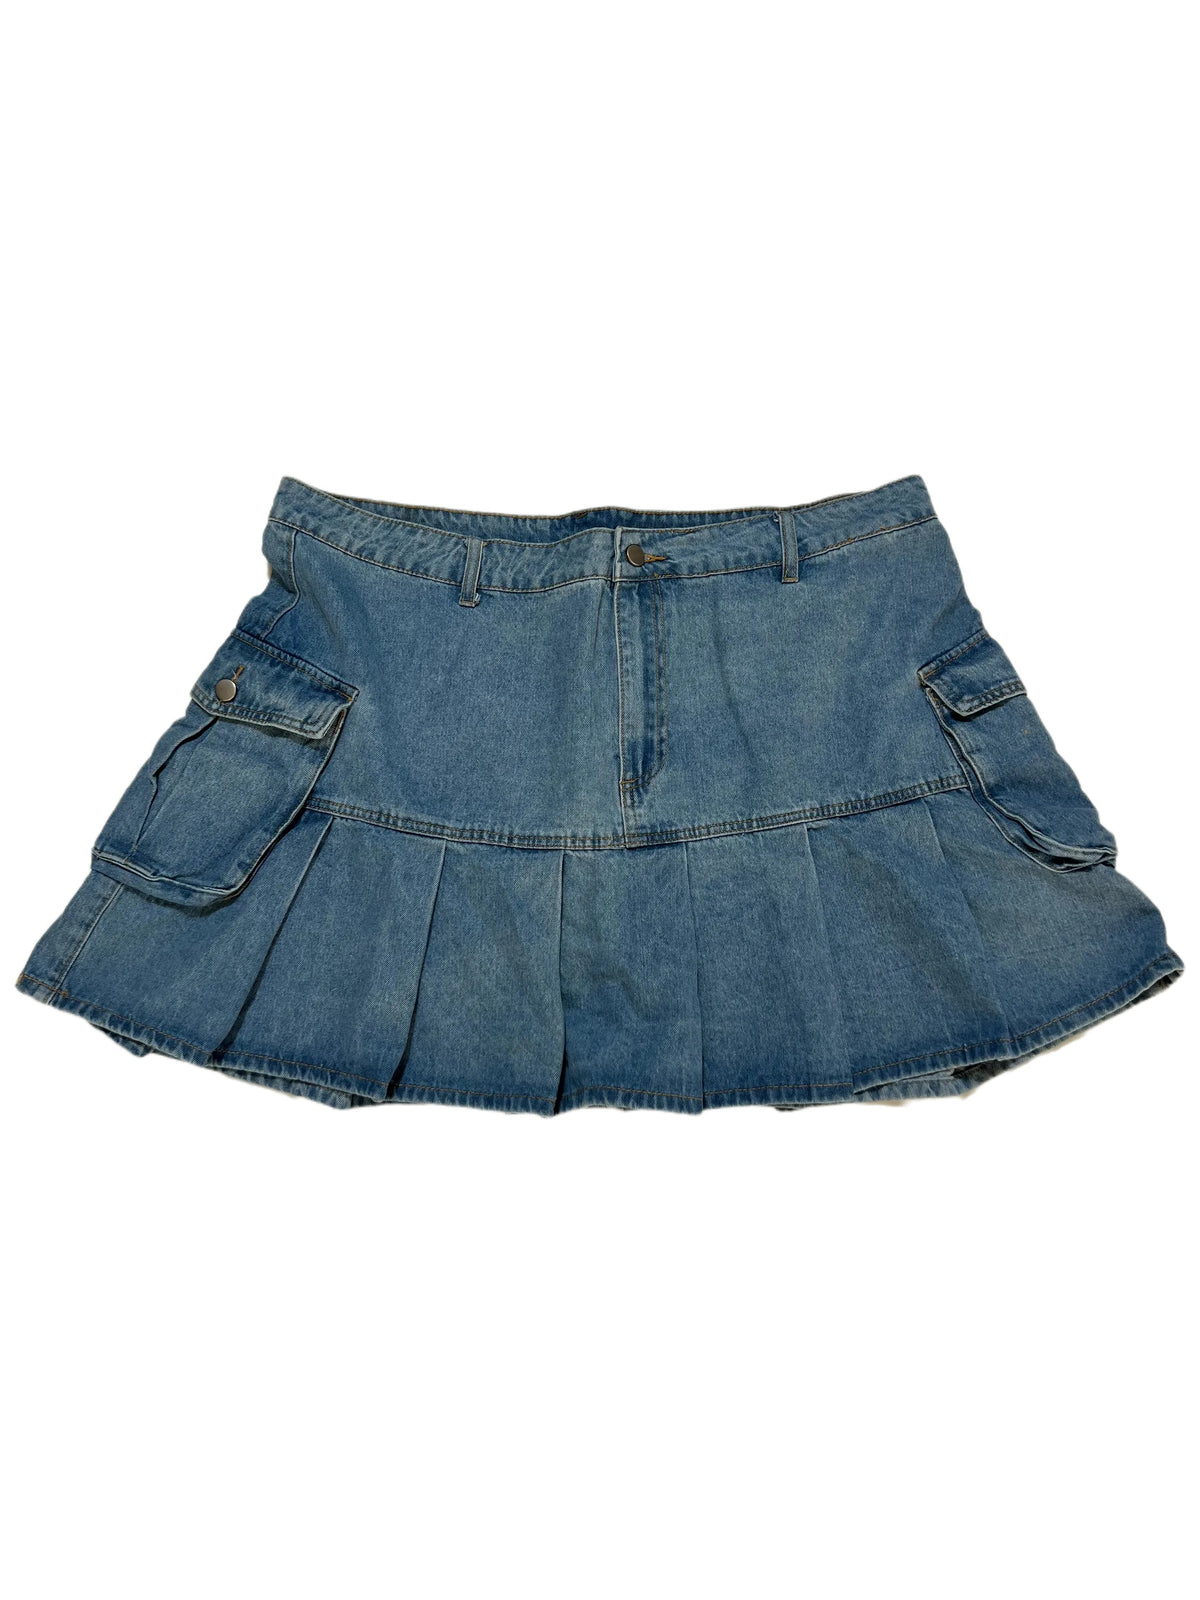 Shein- Denim Pleated Mini Skirt